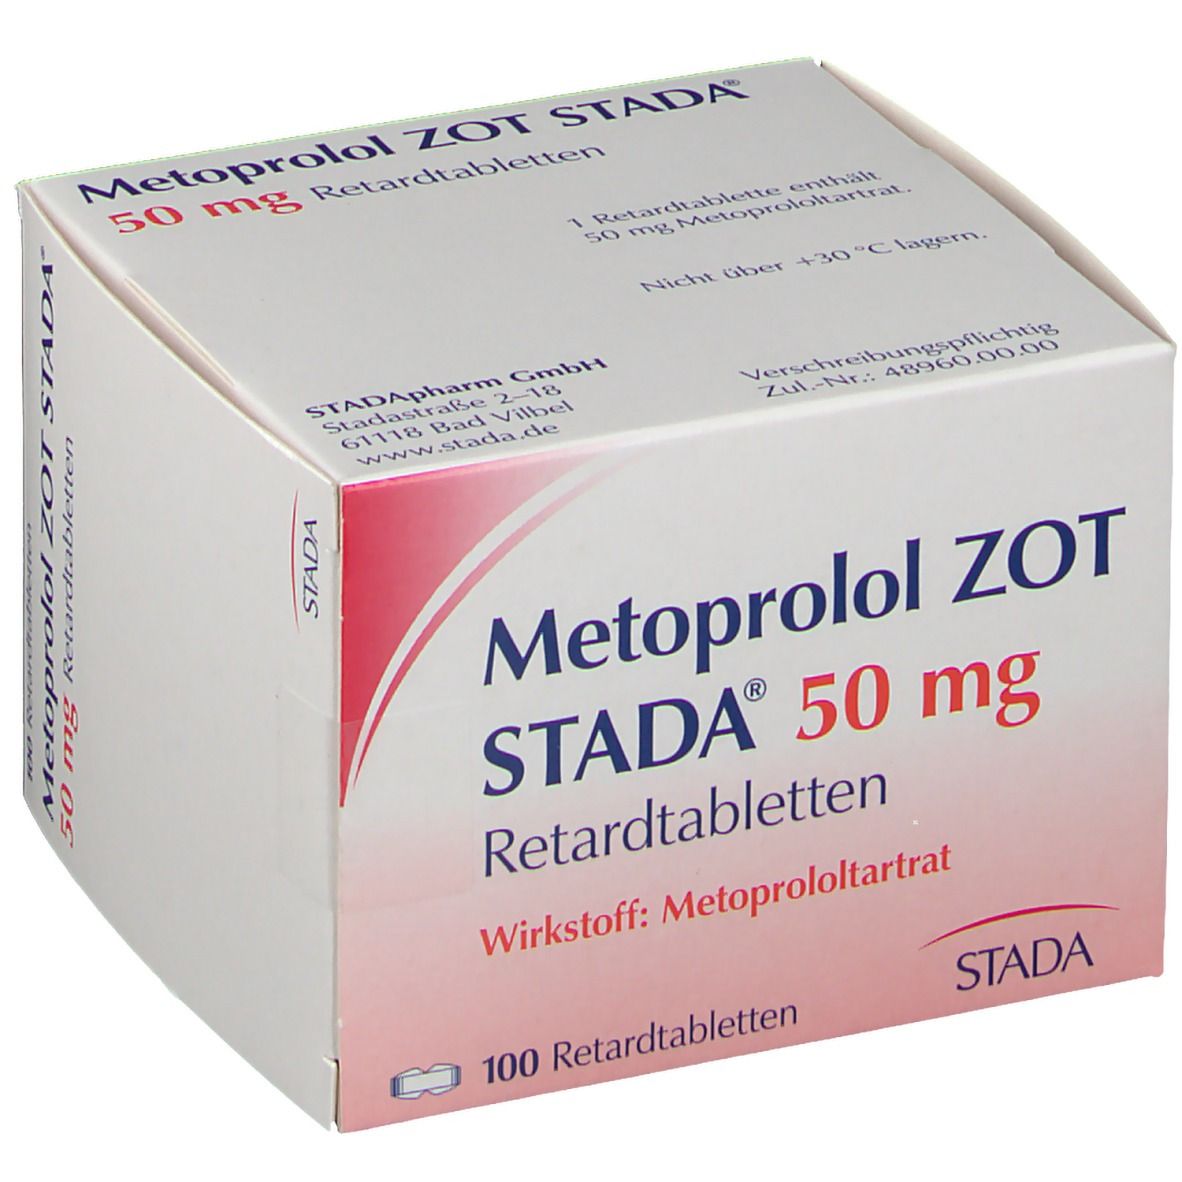 Metoprolol STADA® ZOT 50 mg retard